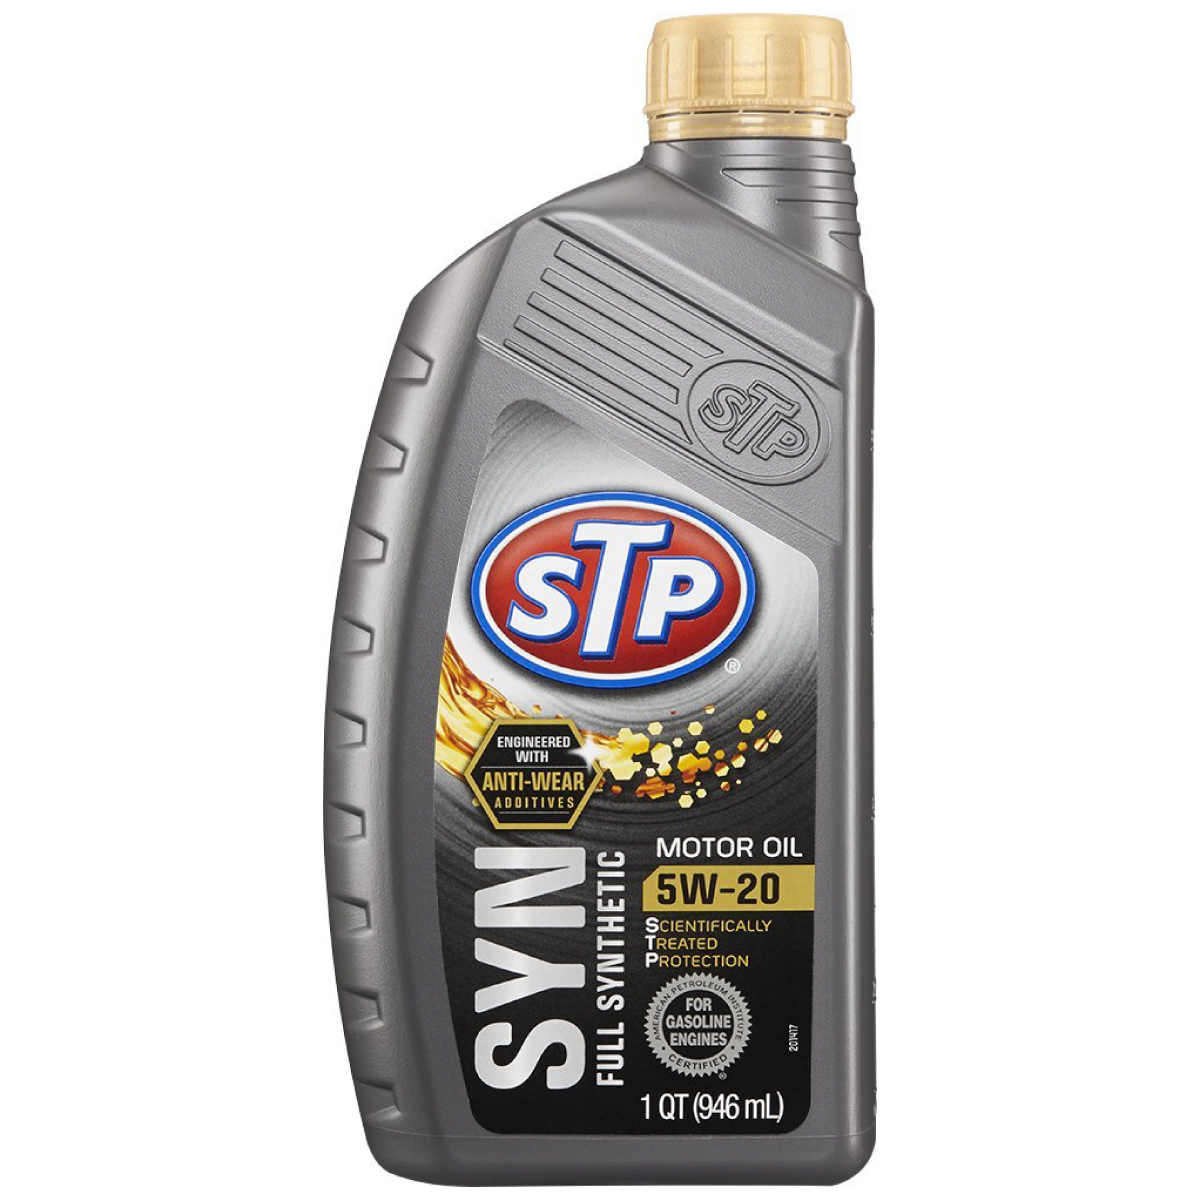 STP Motor Oil Synthetic 32 Oz.